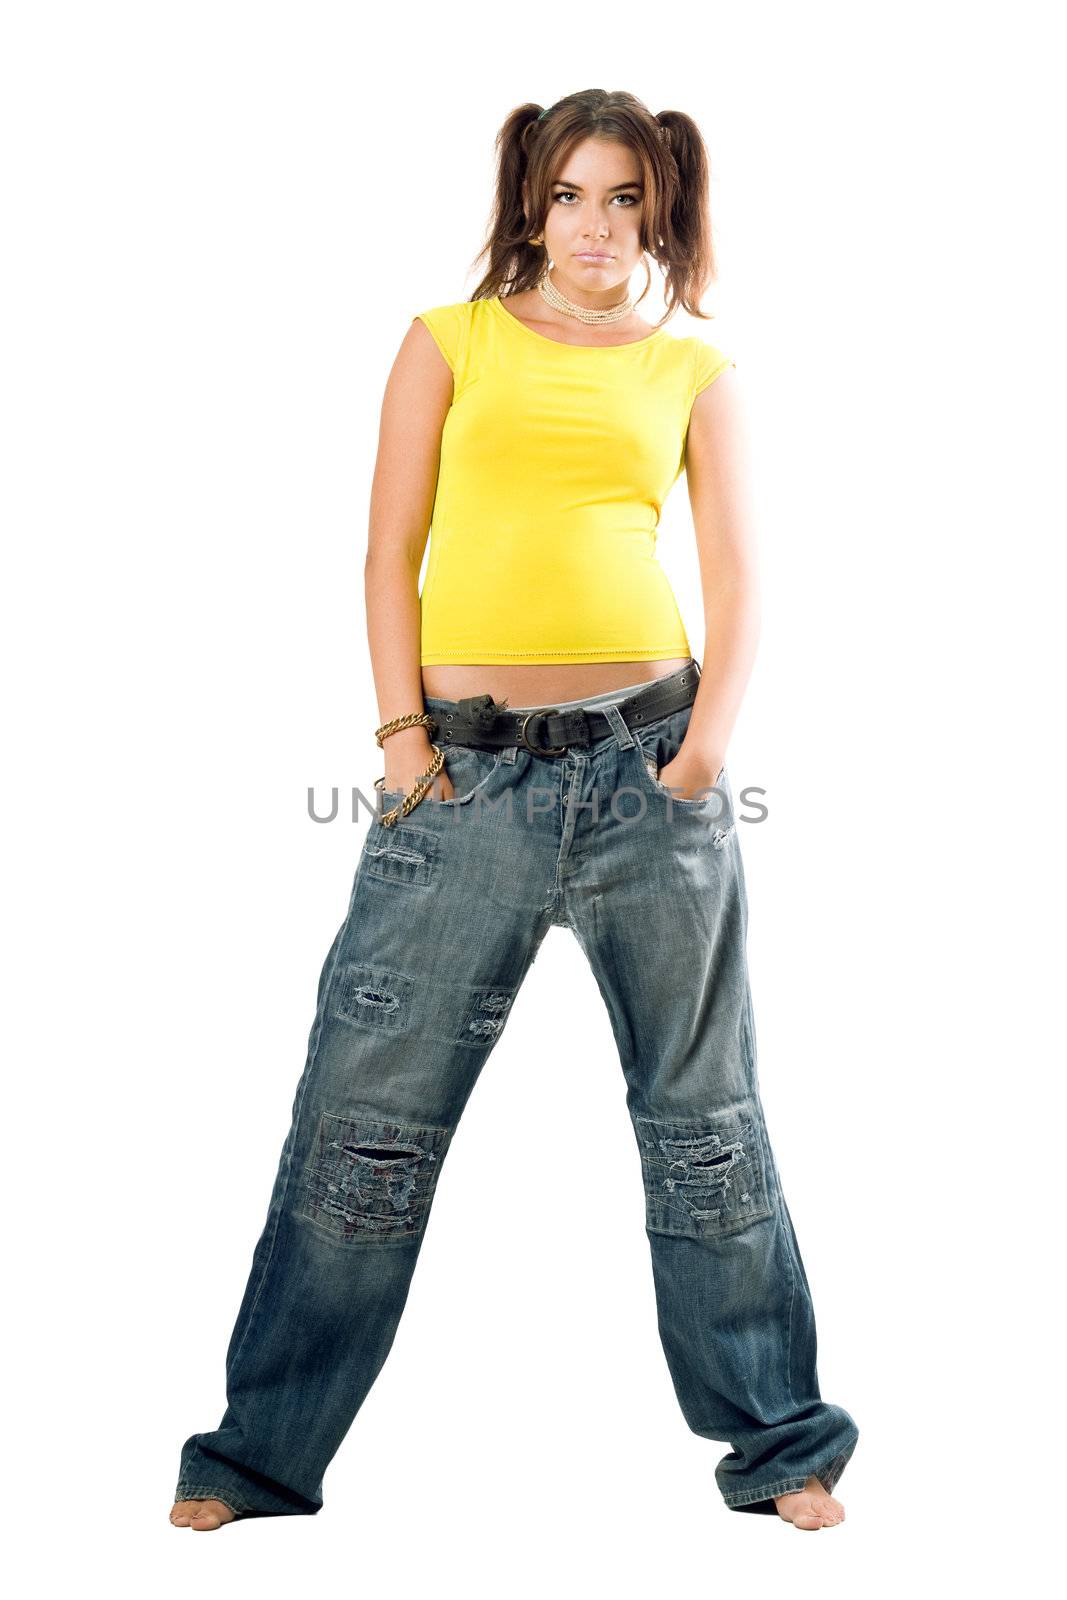 rapper girl in wide jeans by acidgrey